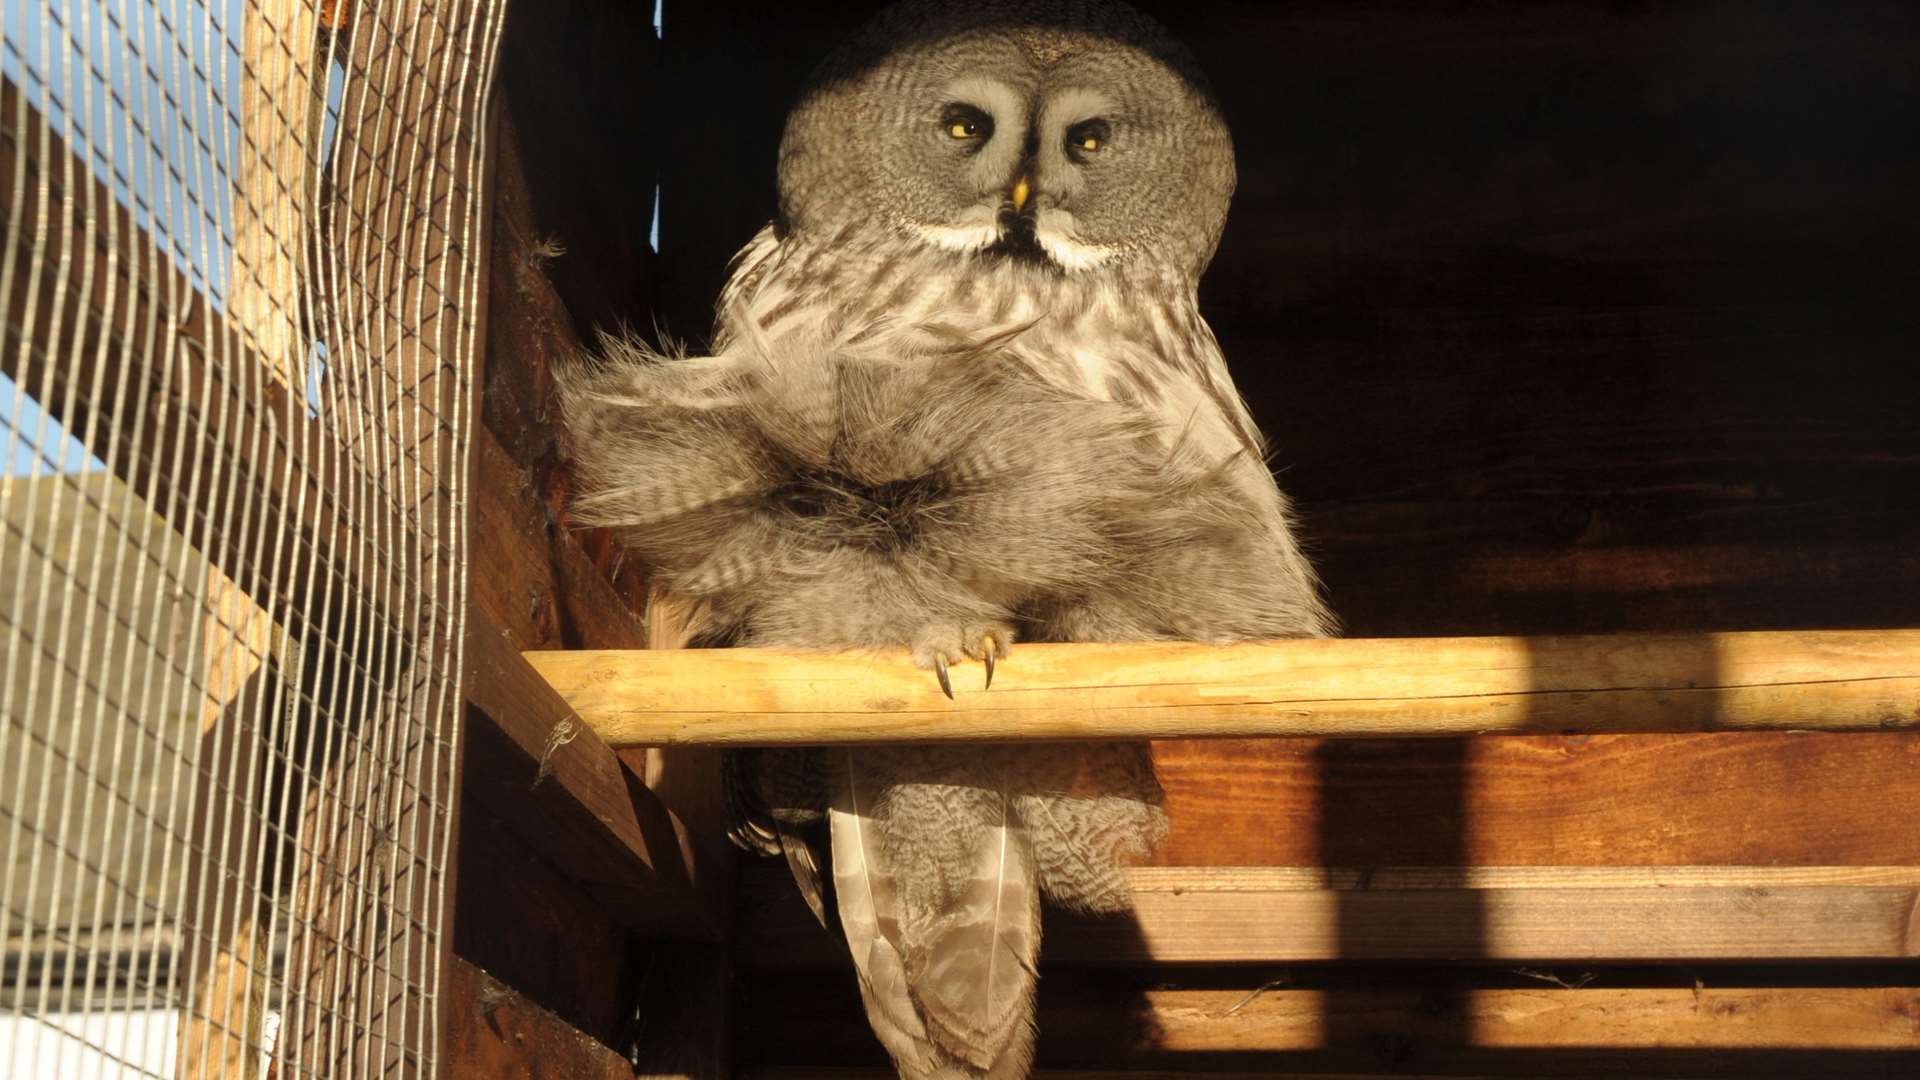 Noodle, the Great Gray Owl. Picture: Steve Crispe.